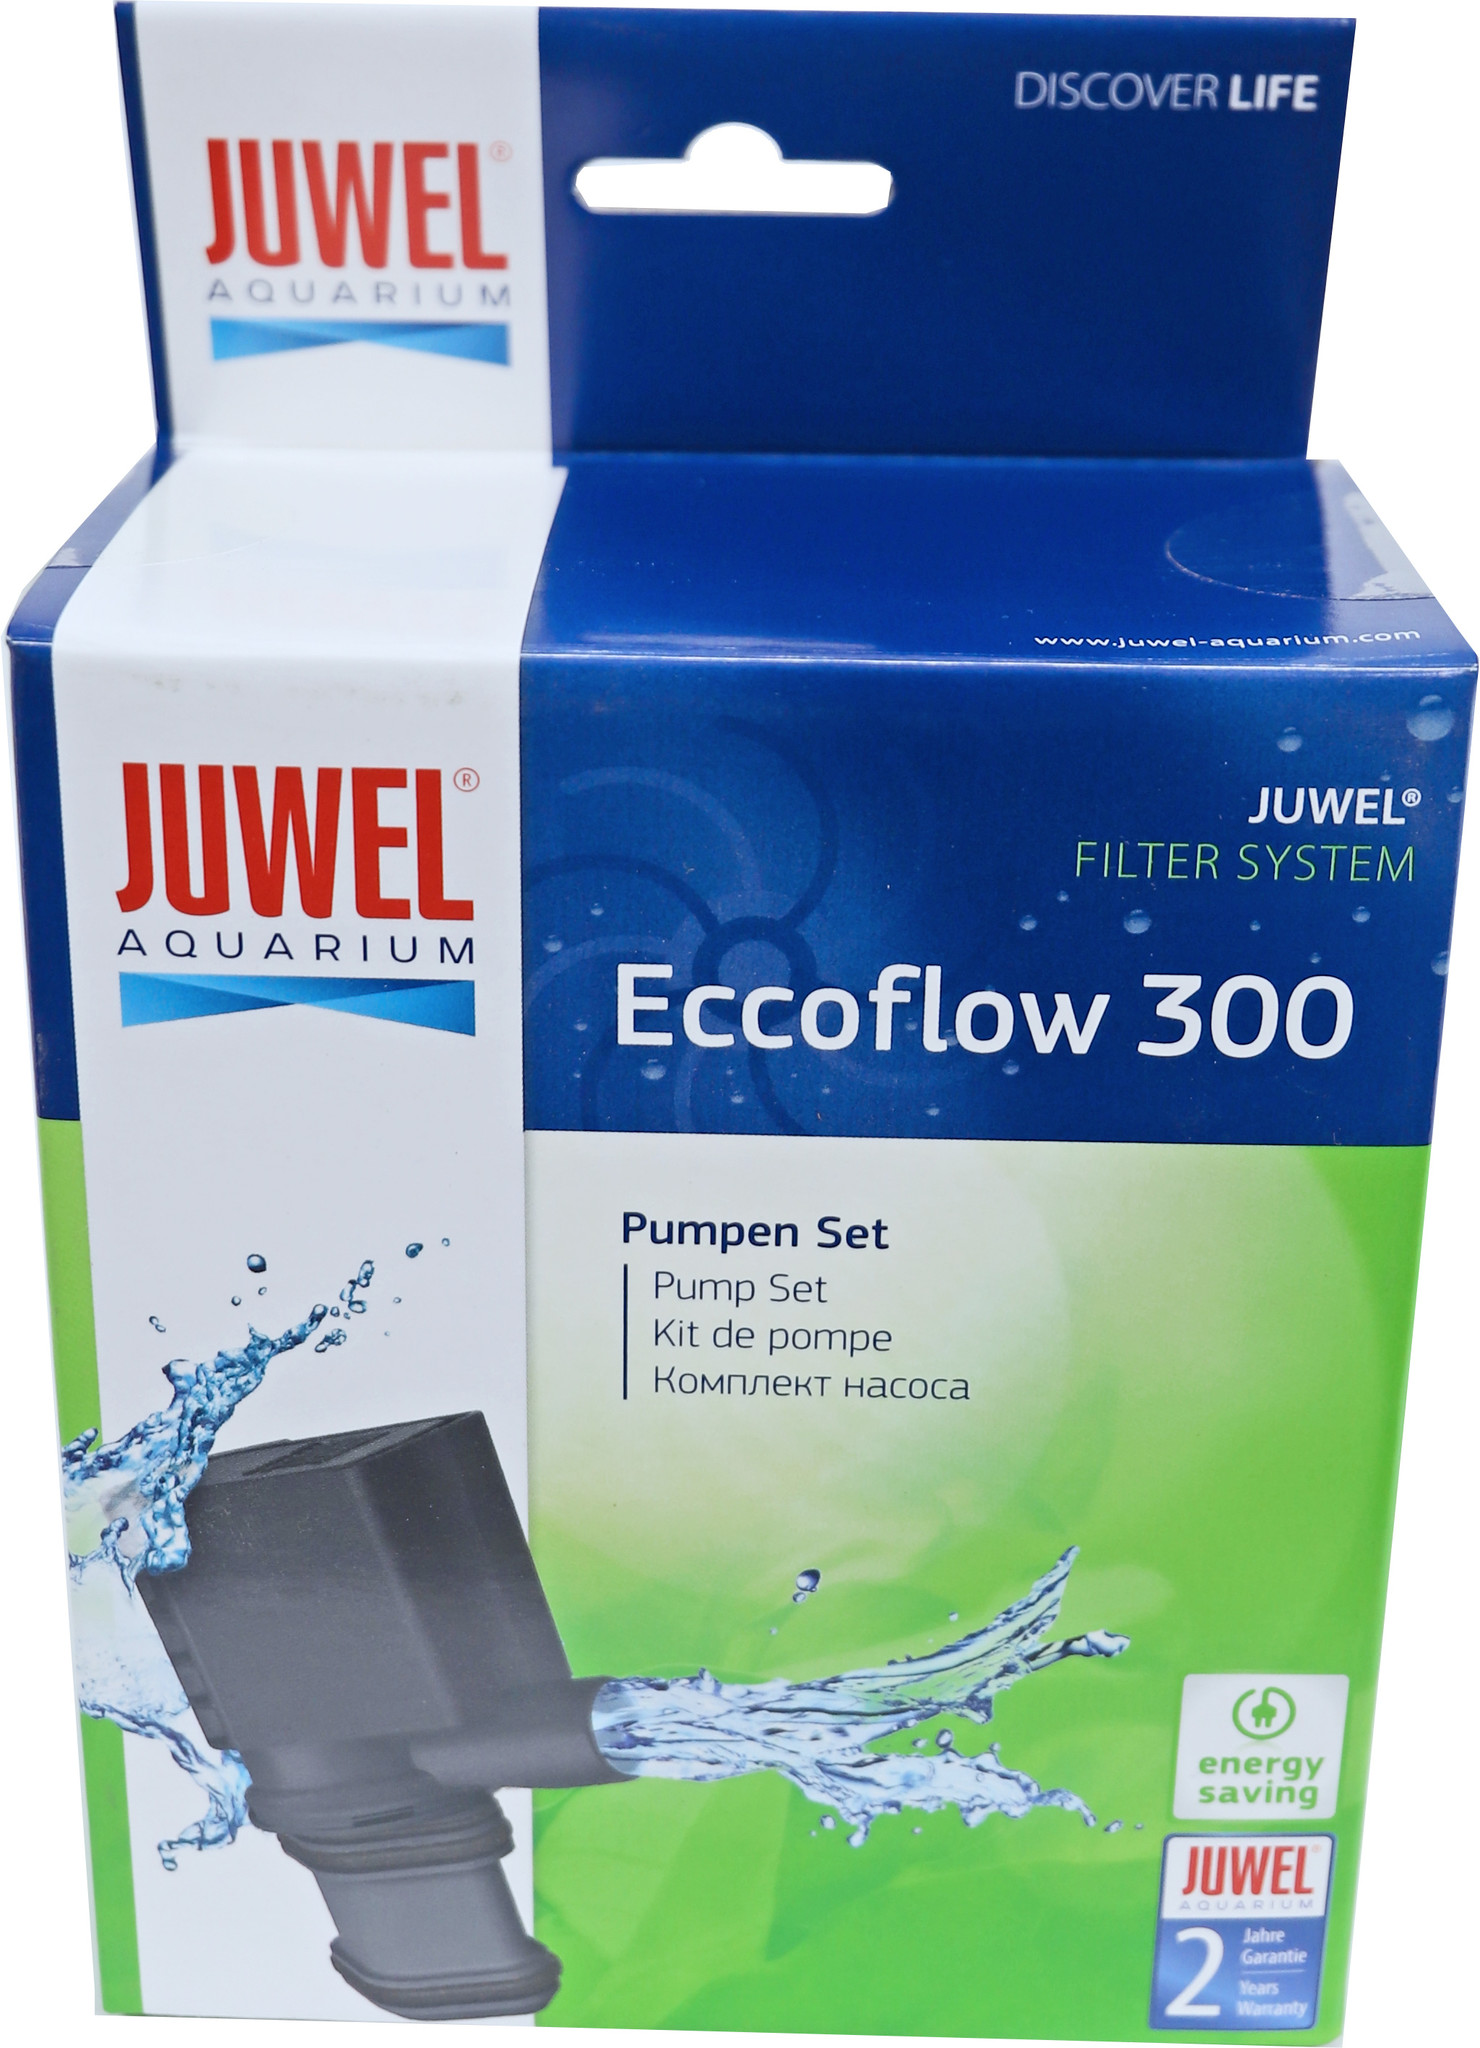 in beroep gaan Aanval Elementair Pomp Eccoflow 300 Liter Juwel - A2KOI & Vijverwinkel